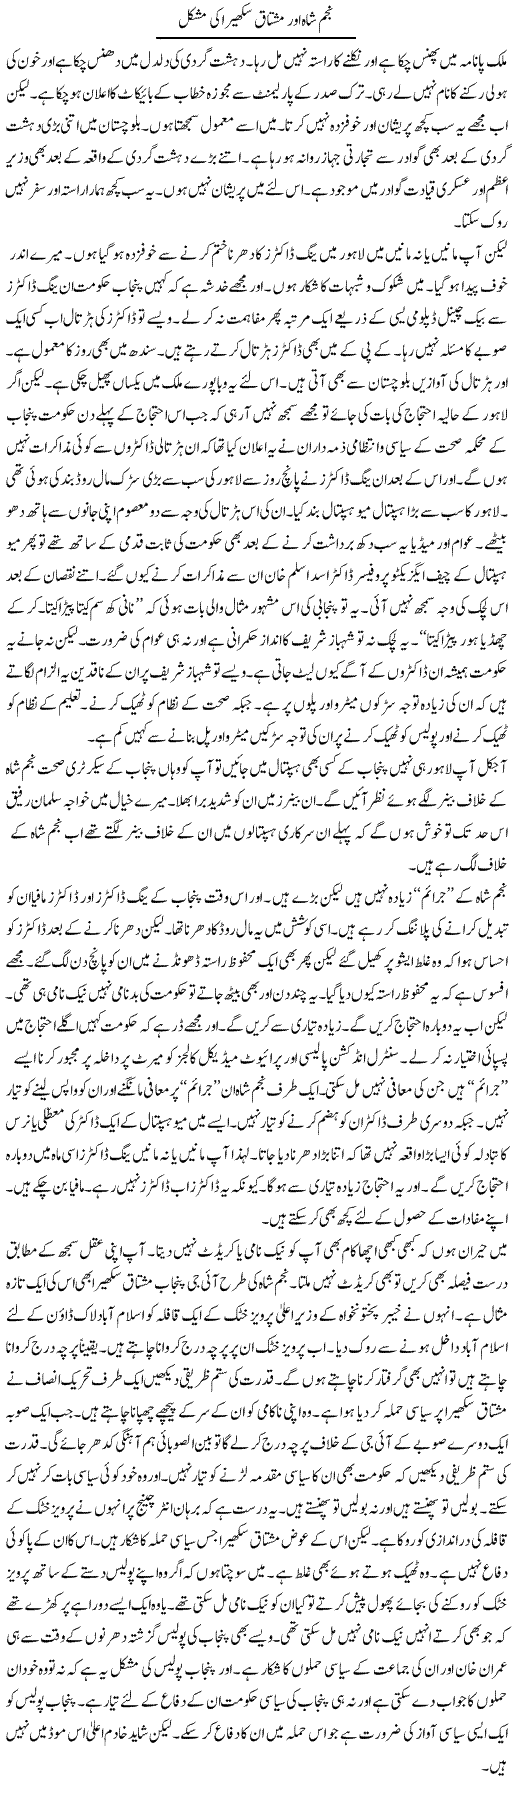 Najam Shah Aor Mushtaq Sukhera Ki Mushkil | Muzamal Suharwardy | Daily Urdu Columns